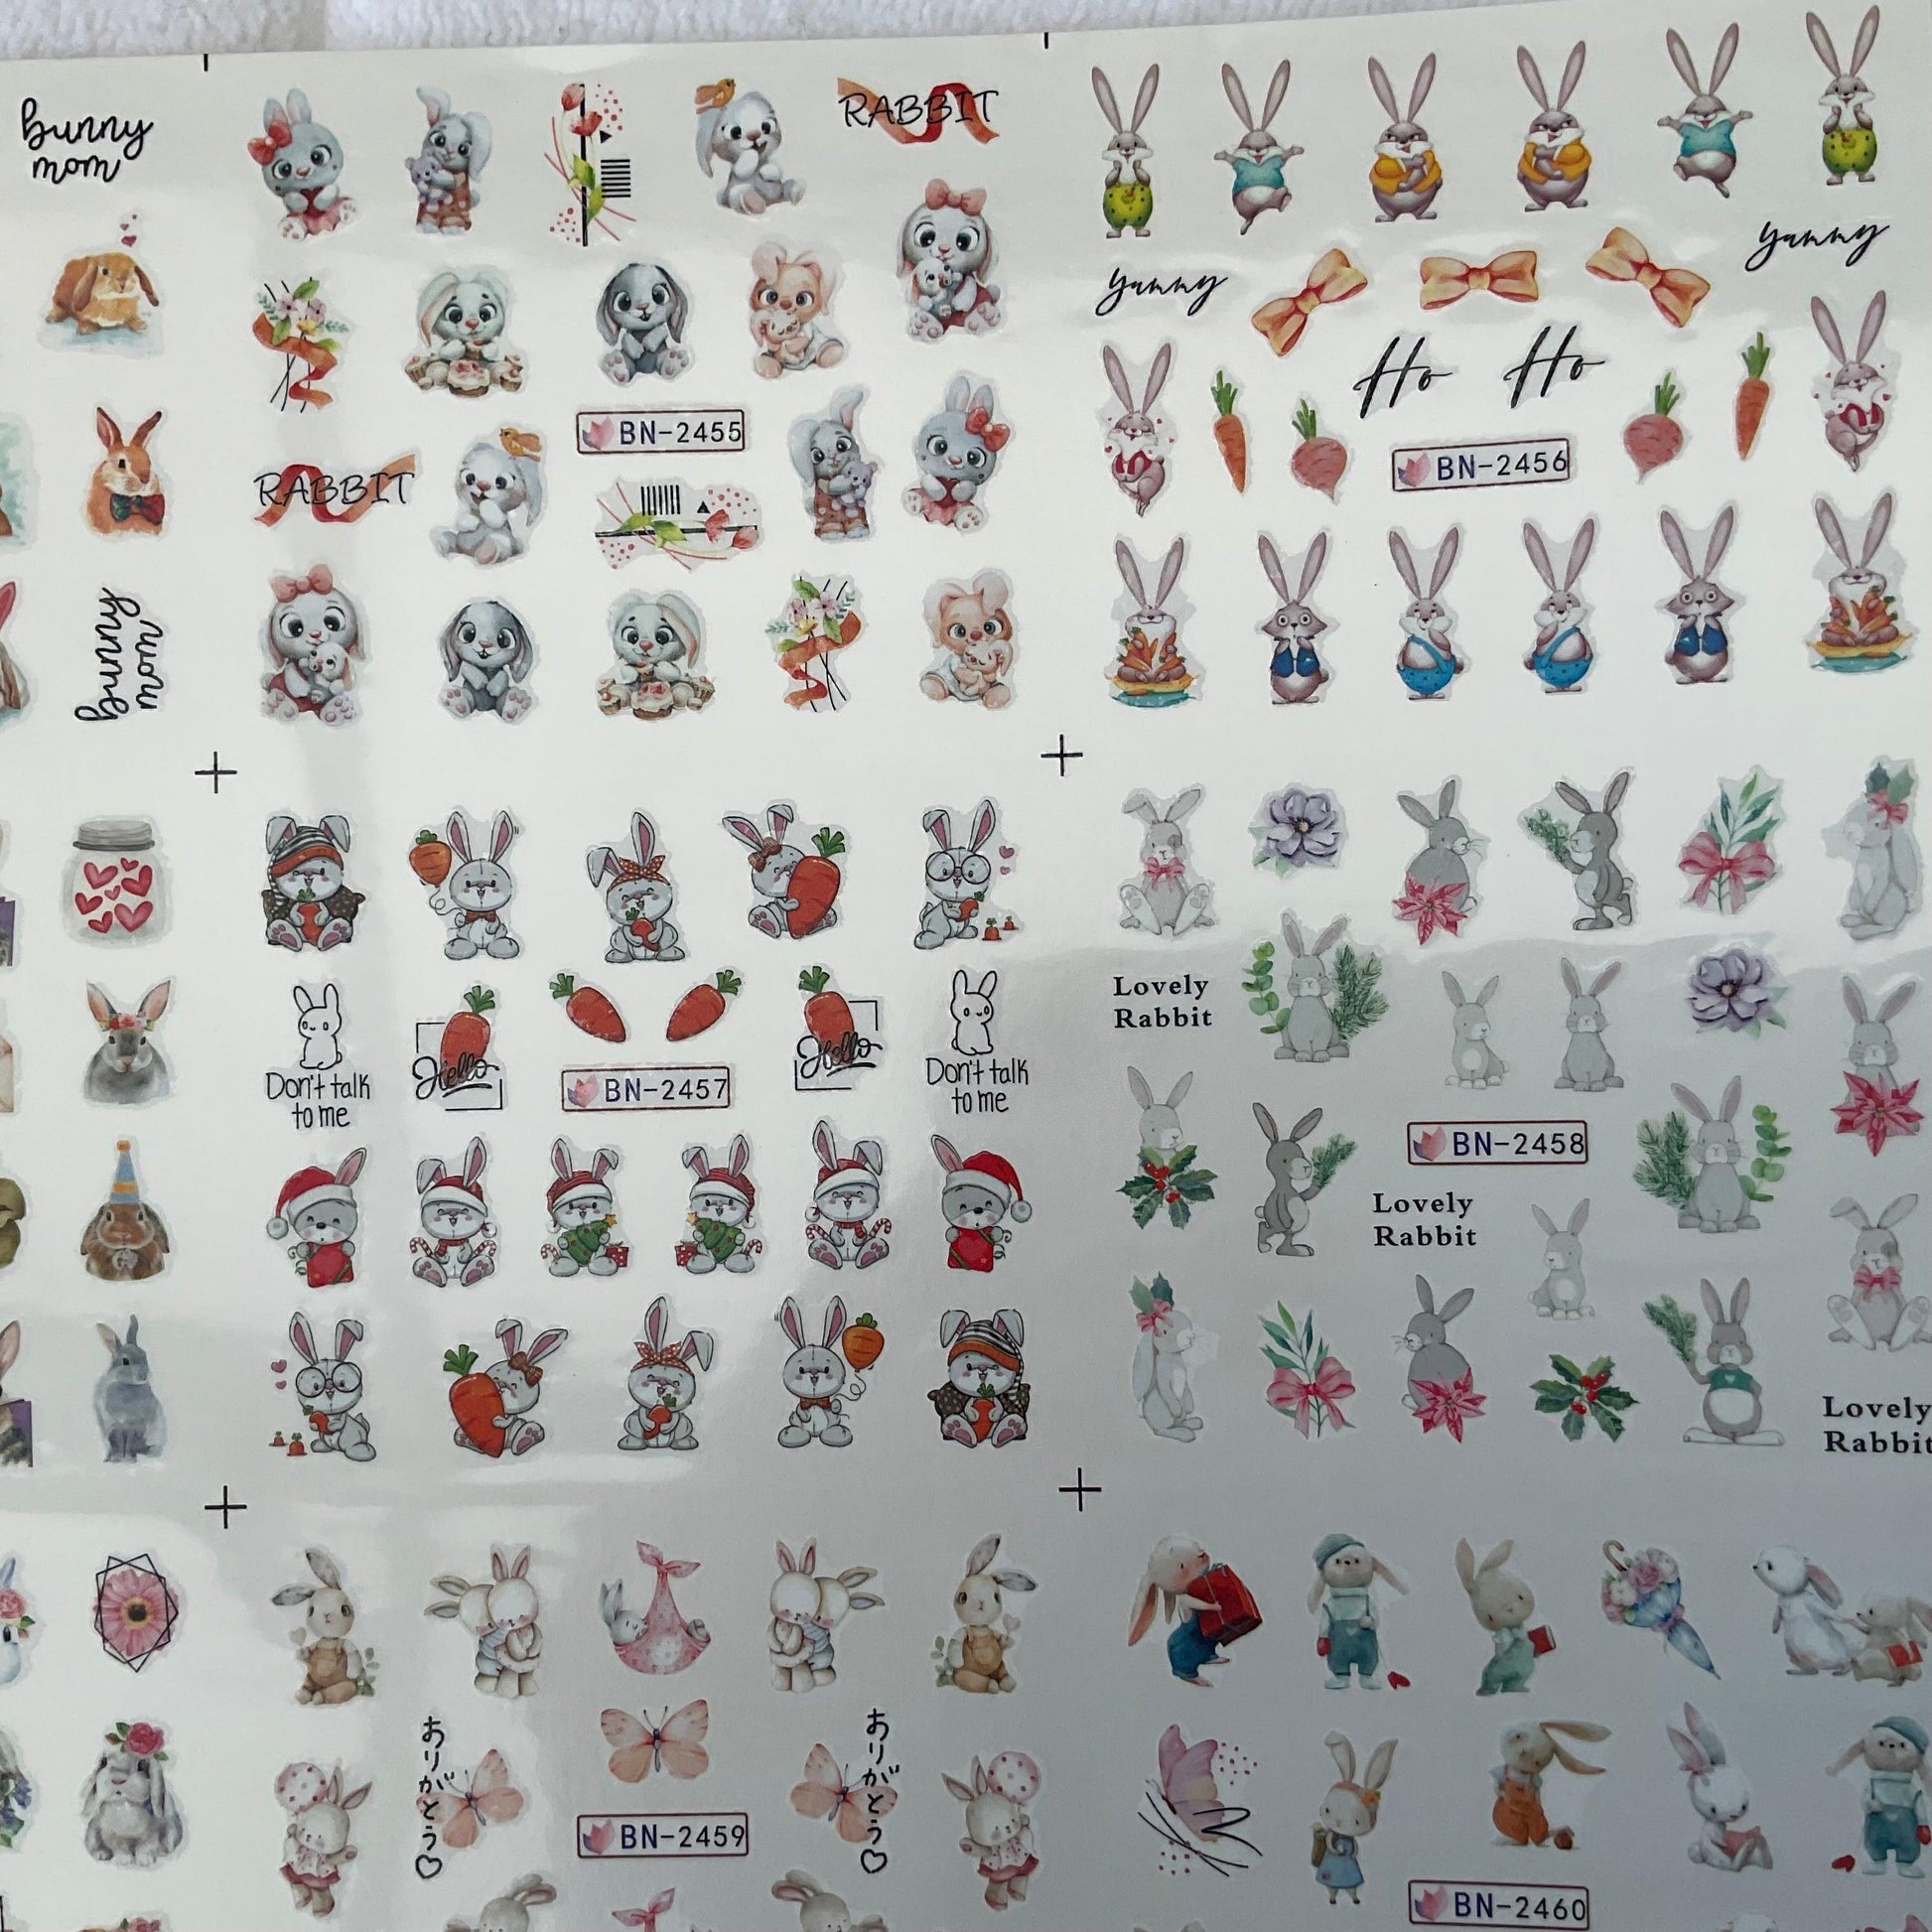 Bumper Sheet of Bunny Nail Art Stickers - Bunny Creations